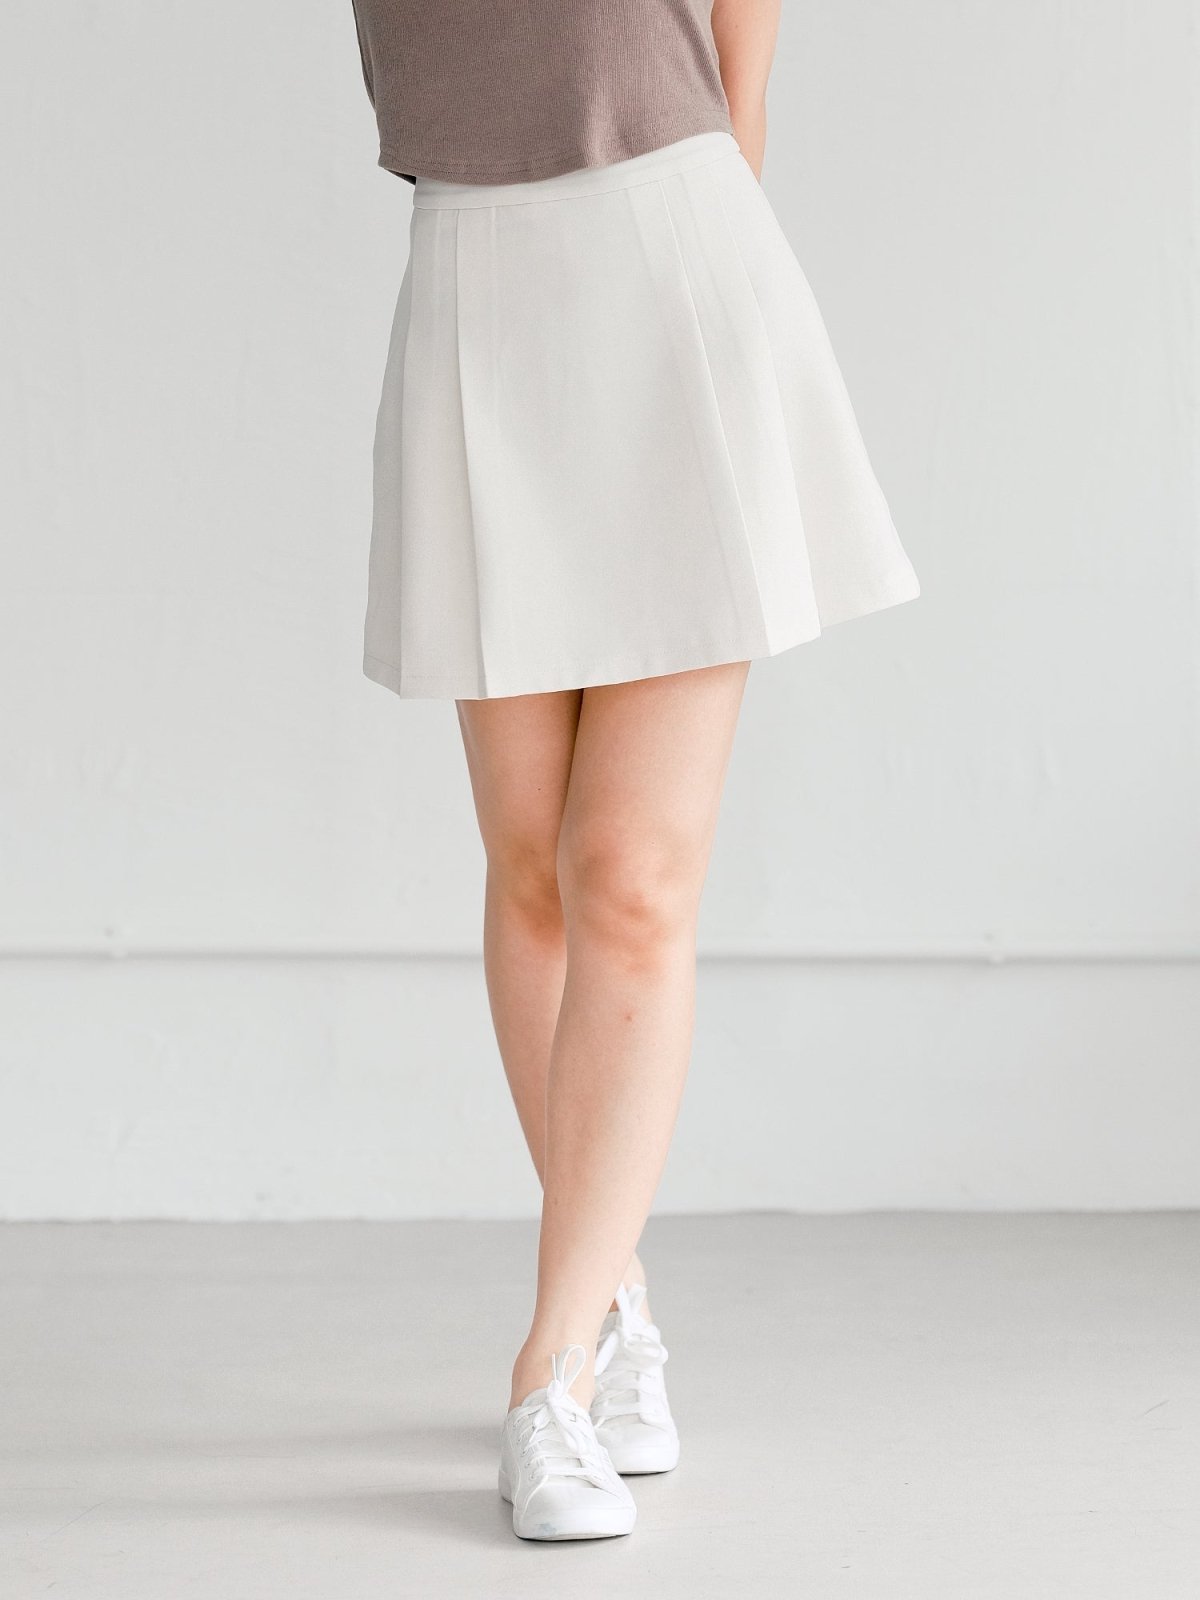 Seraphine Pleated Mini Skirt - DAG-G-220171WhiteS - Mochi Ivory - S - D'zage Designs